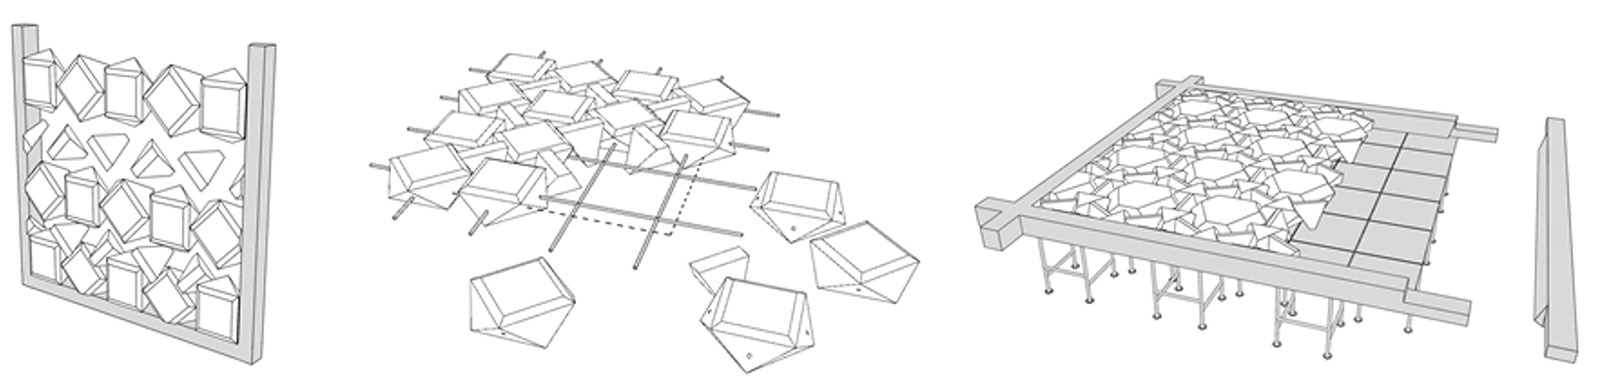 topological interlocking floor